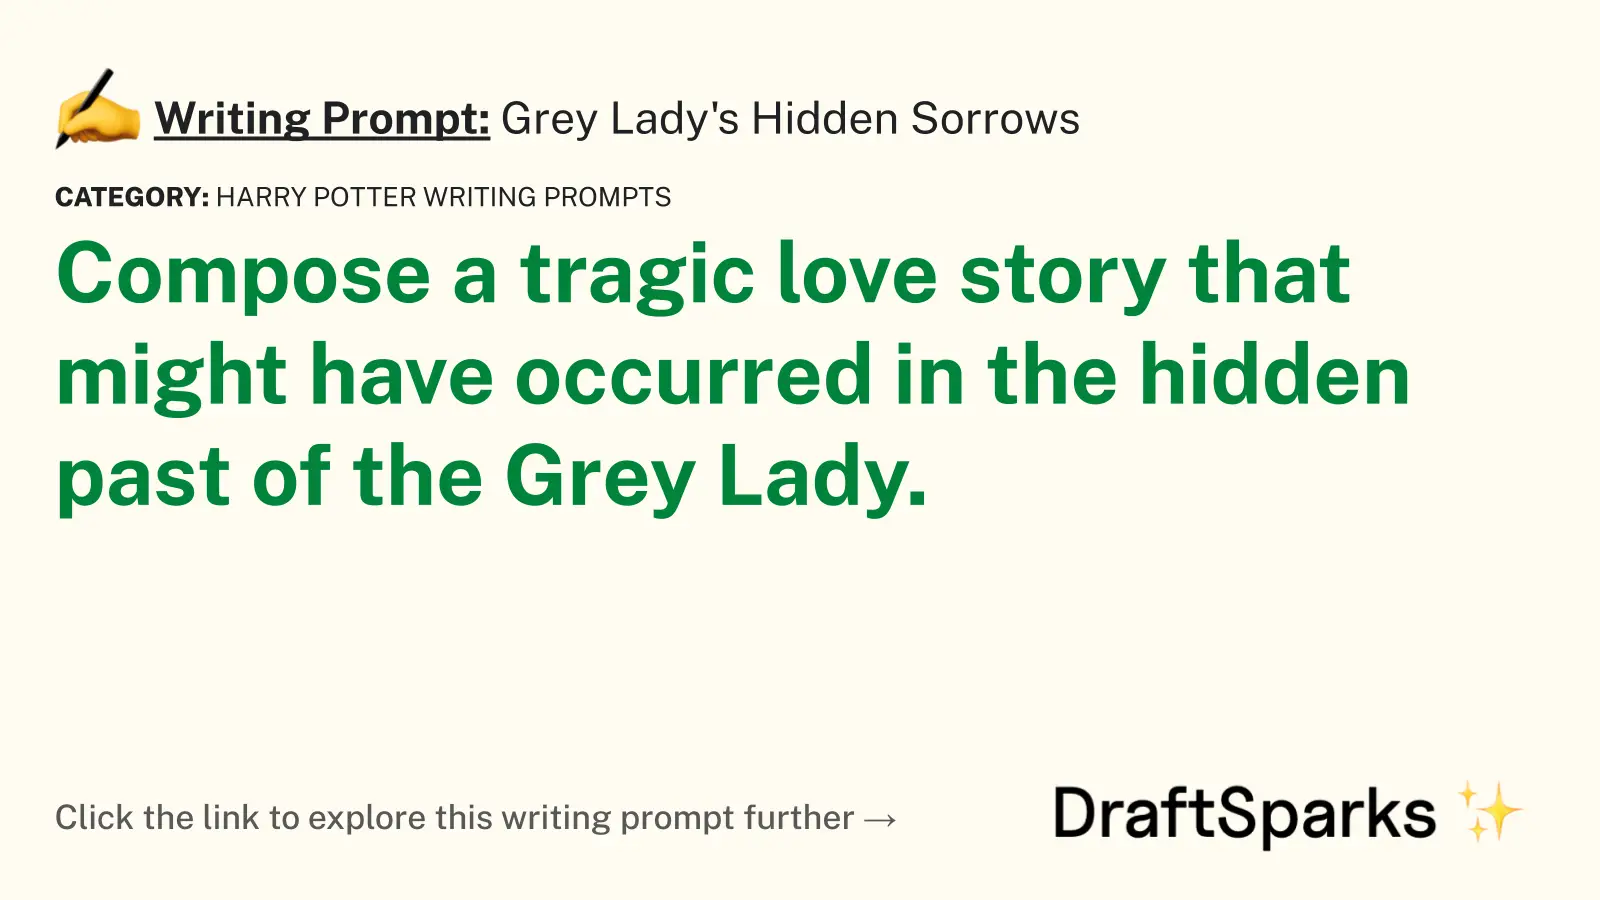 Grey Lady’s Hidden Sorrows